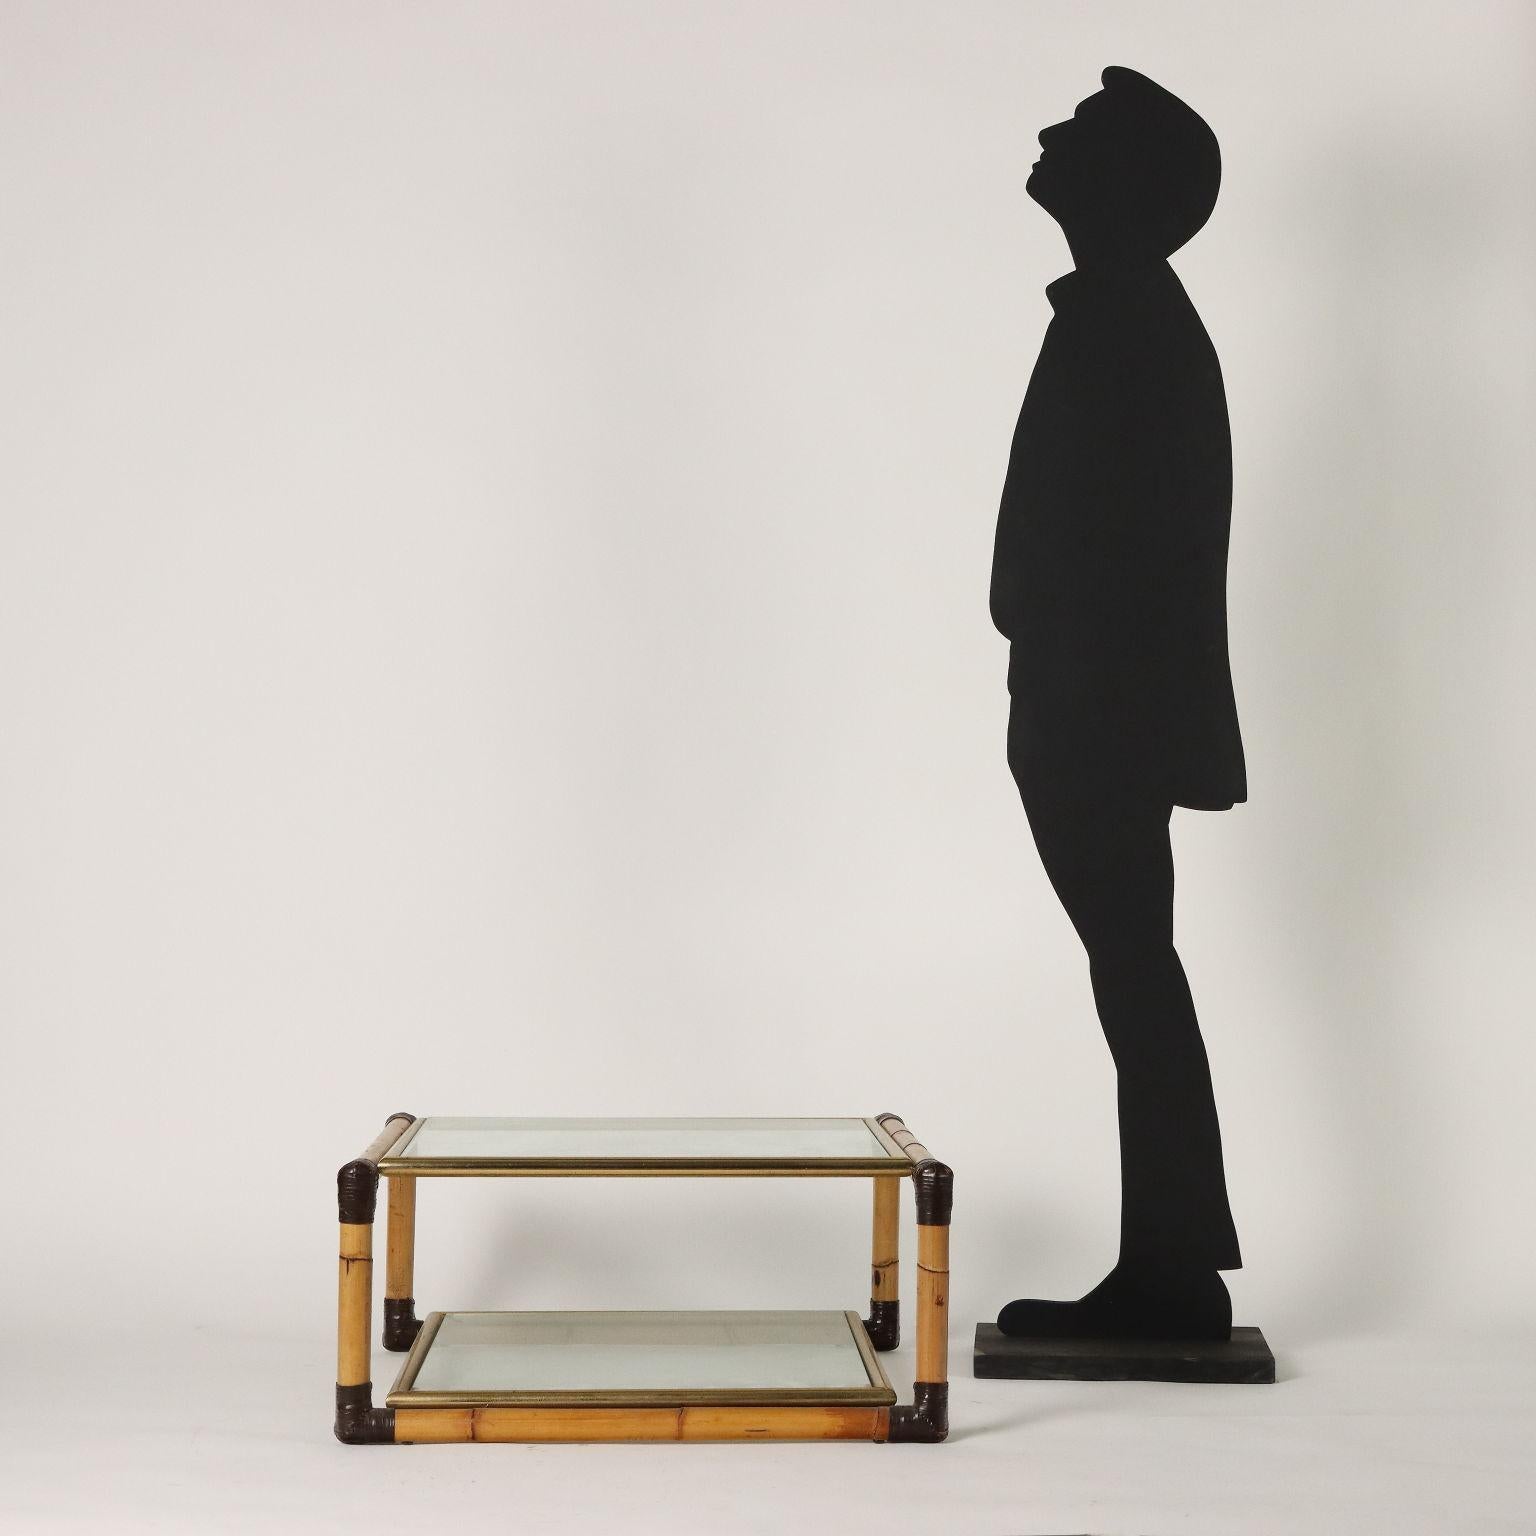 Coffee table by Arch. Fabrizio Smania for Studio Smania Interni; bamboo wood, glass, brass.